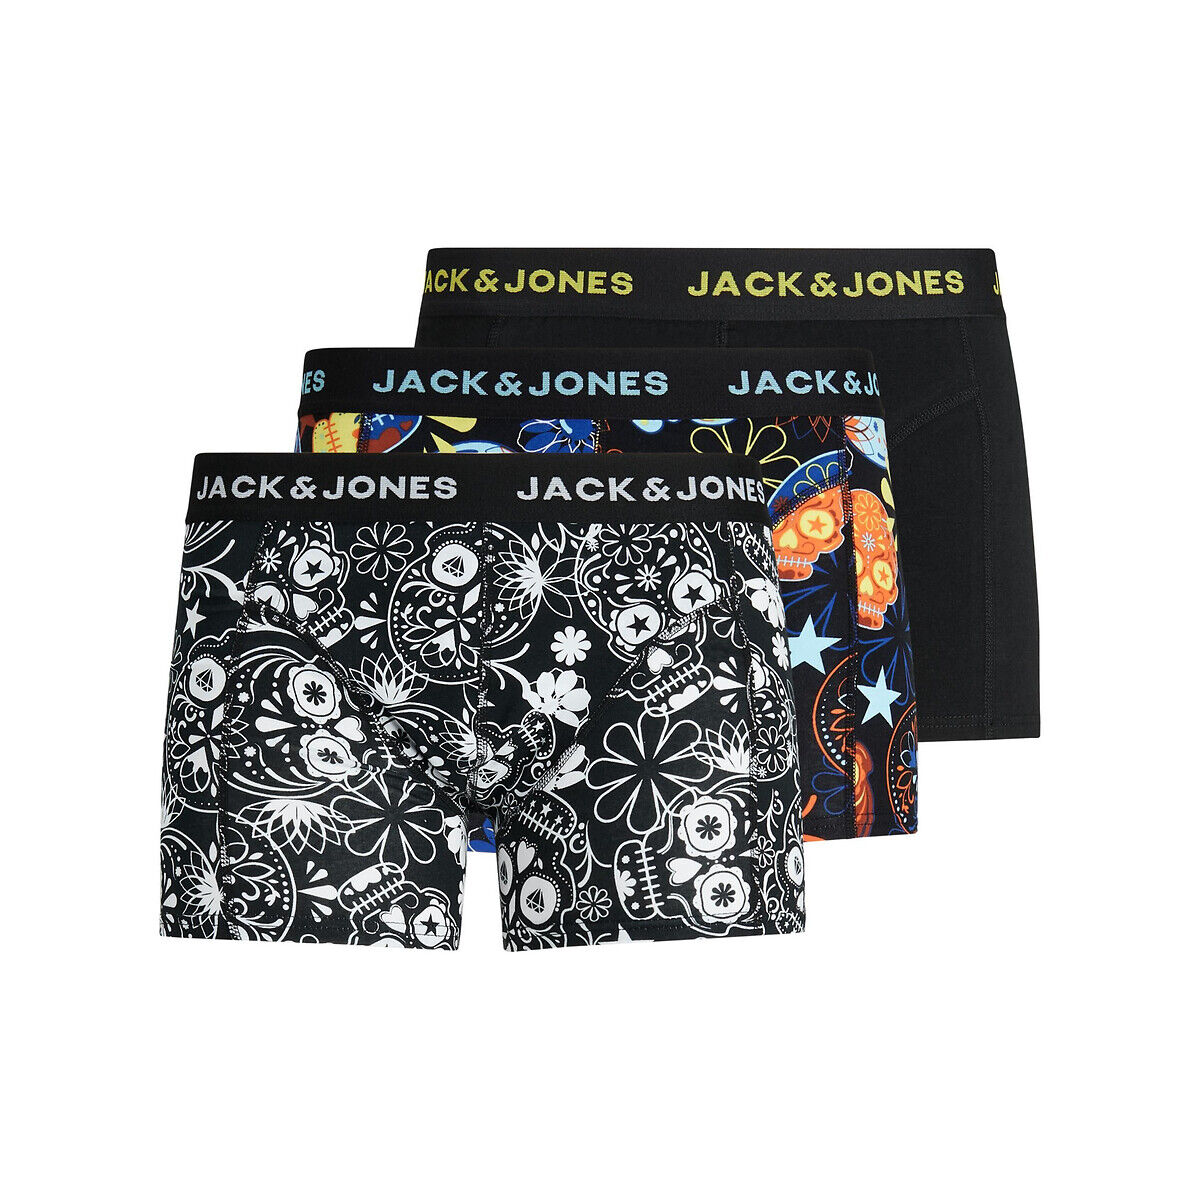 JACK & JONES Lot de 3 boxers motifs fleuris